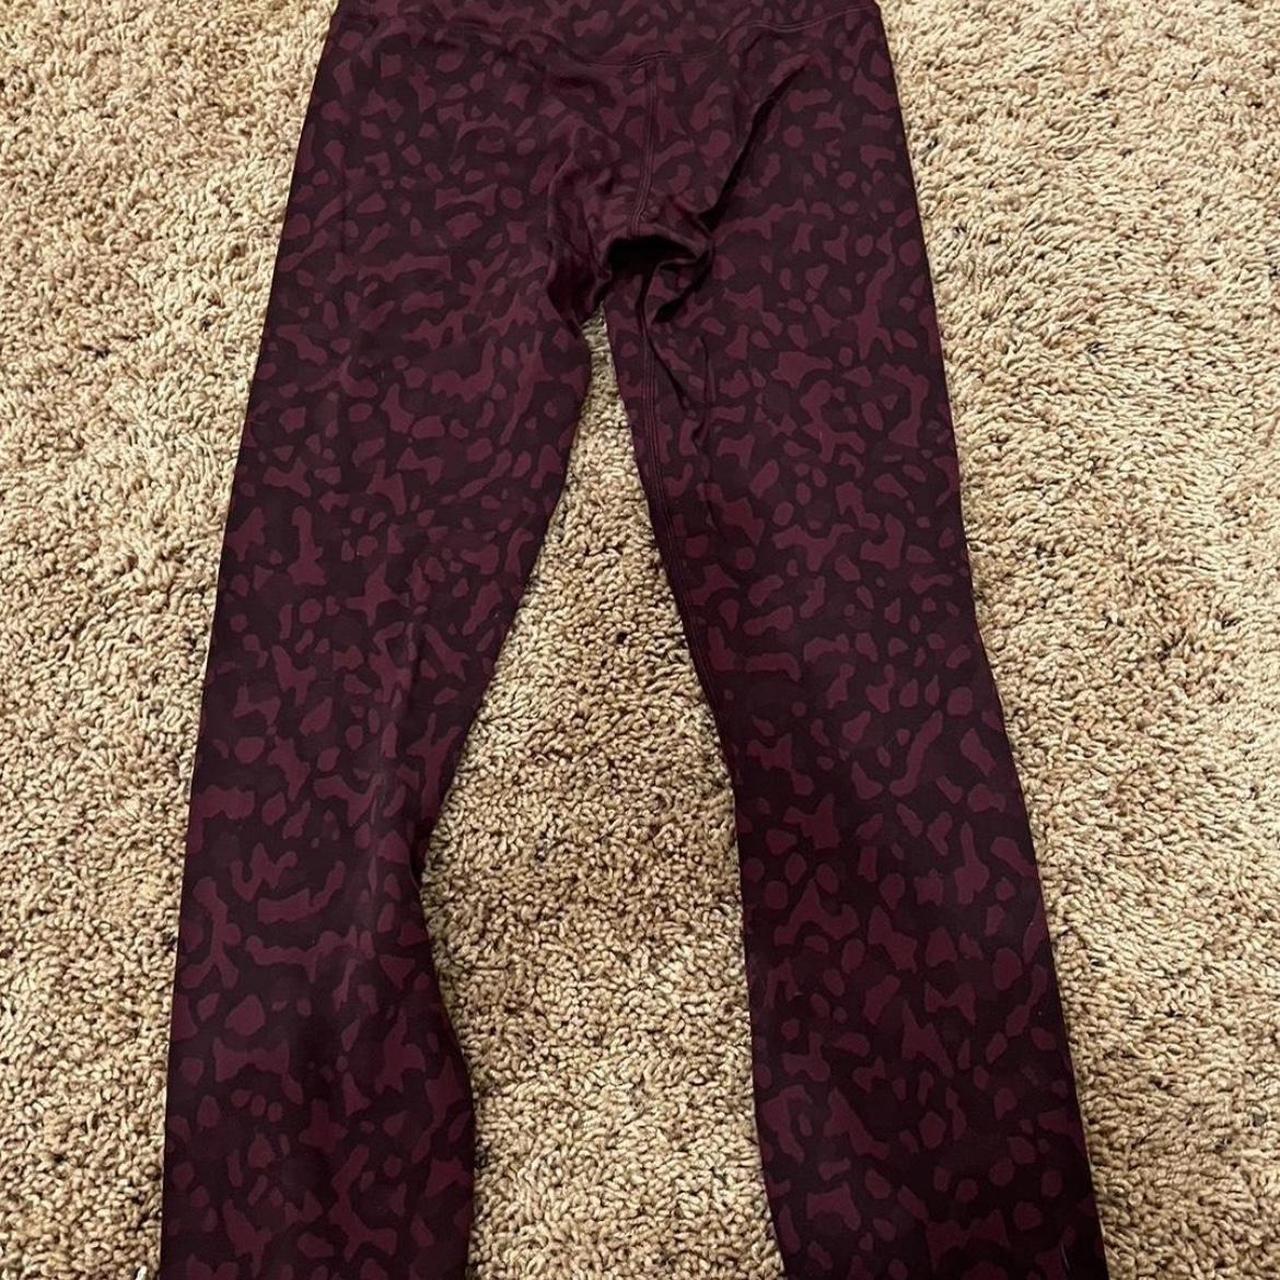 Lululemon cheetah print leggings, Inseam I think is